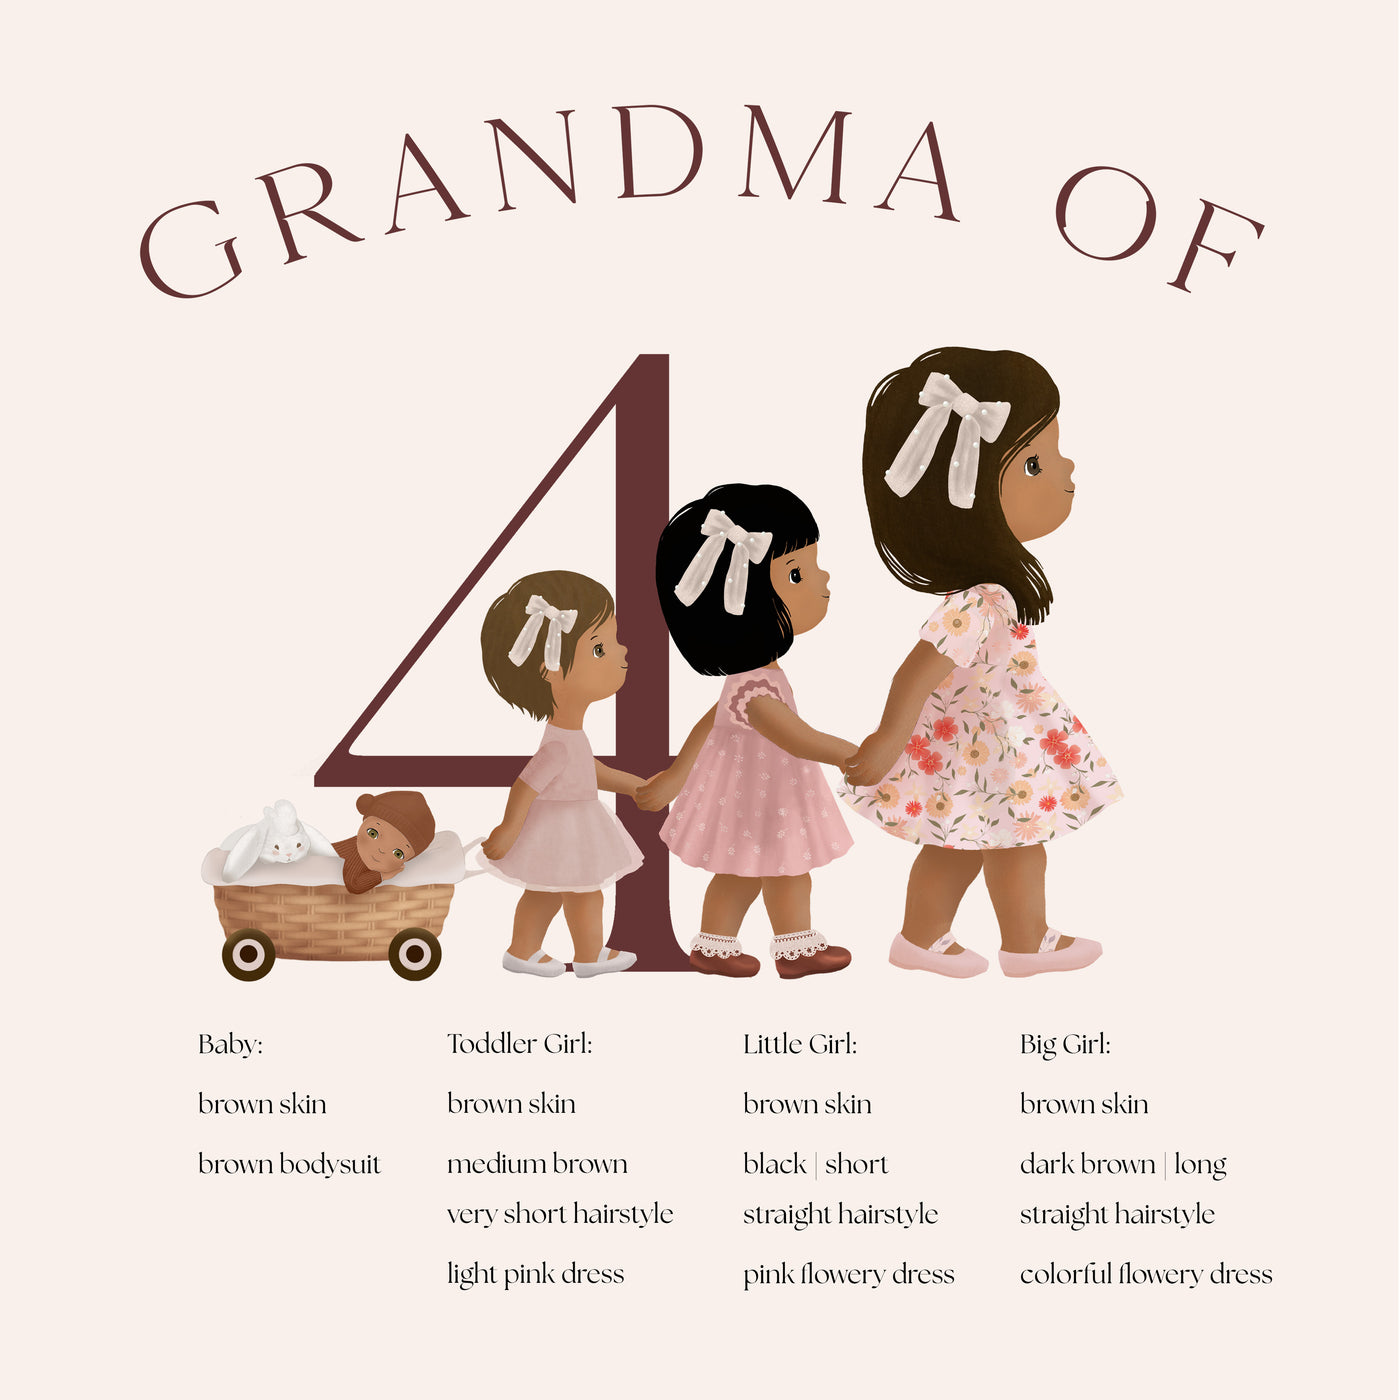 Personalized Tote for Grandma | Custom Illustration of Grandchildren